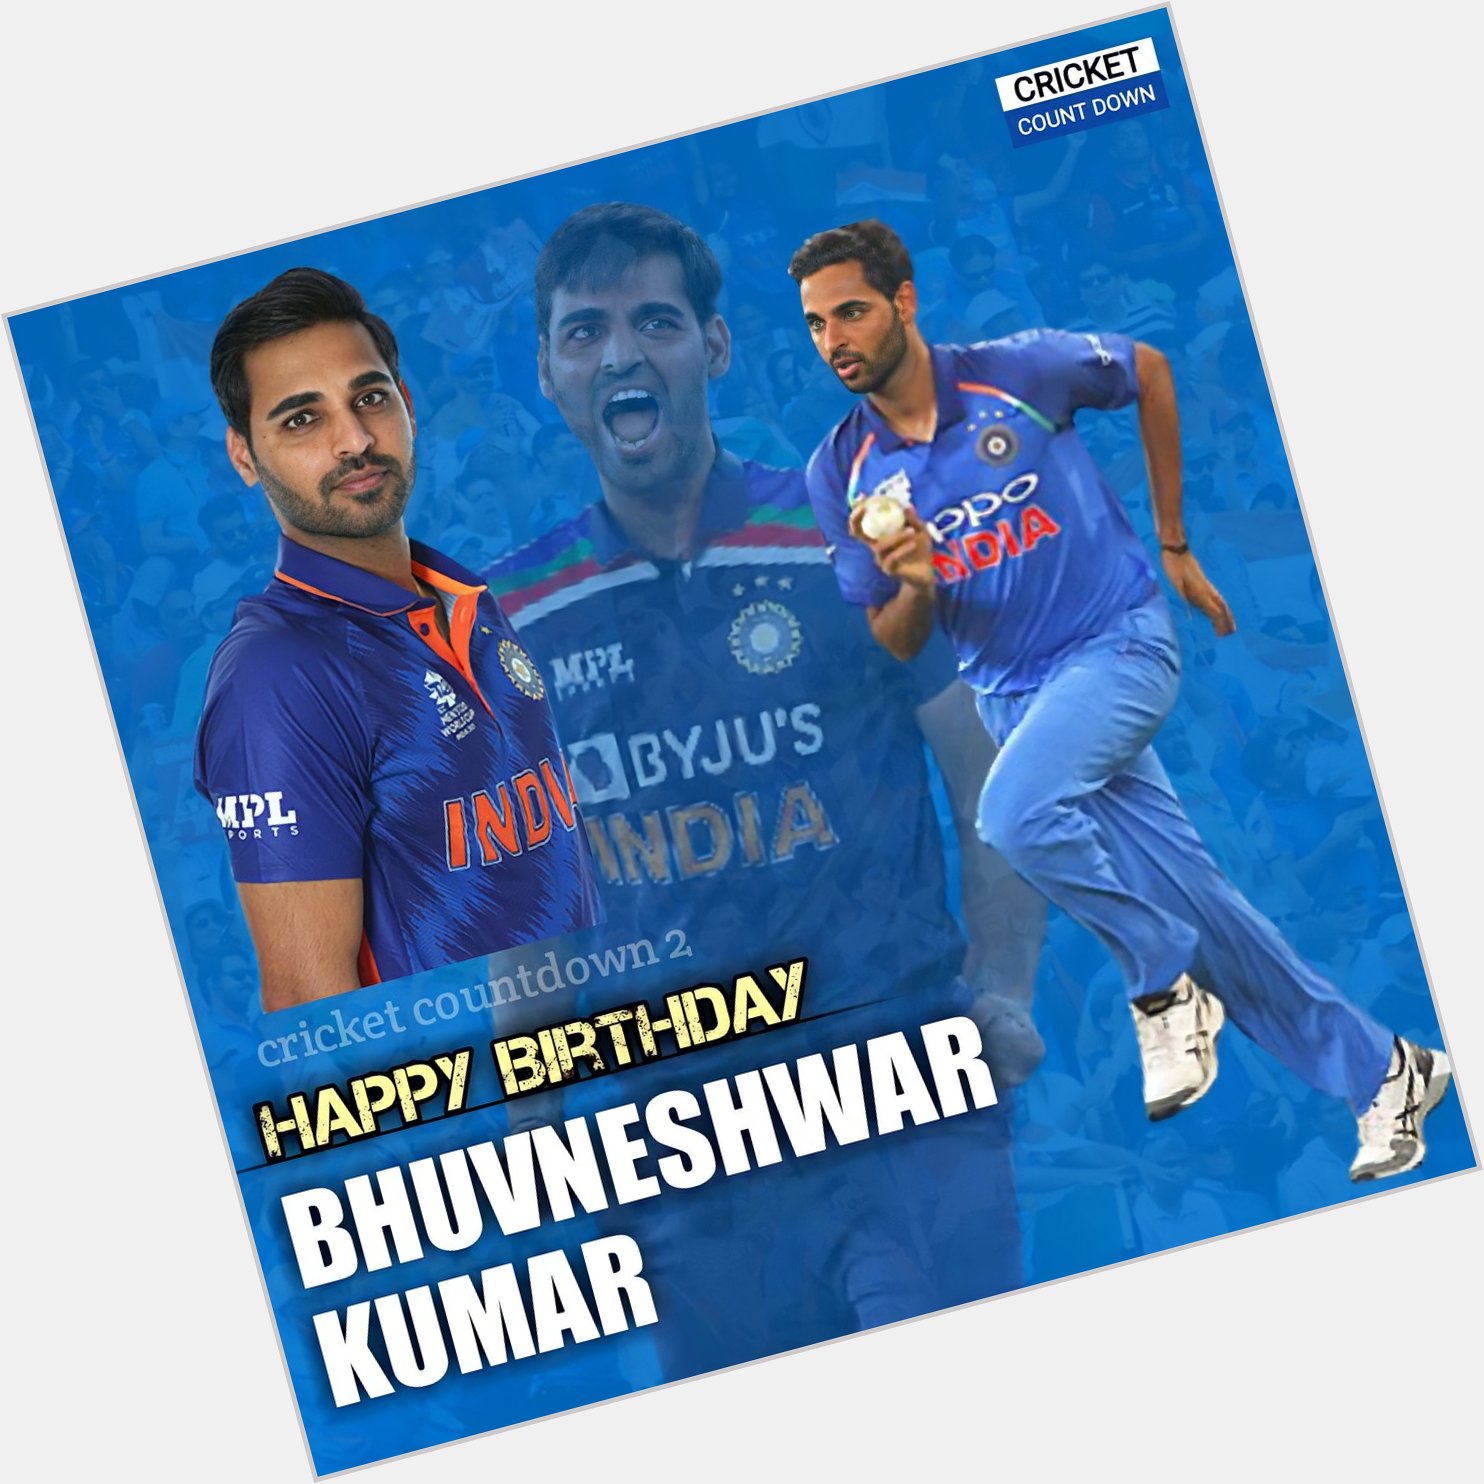  Happy birthday  Sir let me remind you that today is Bhuvneshwar Kumar\s birthday 